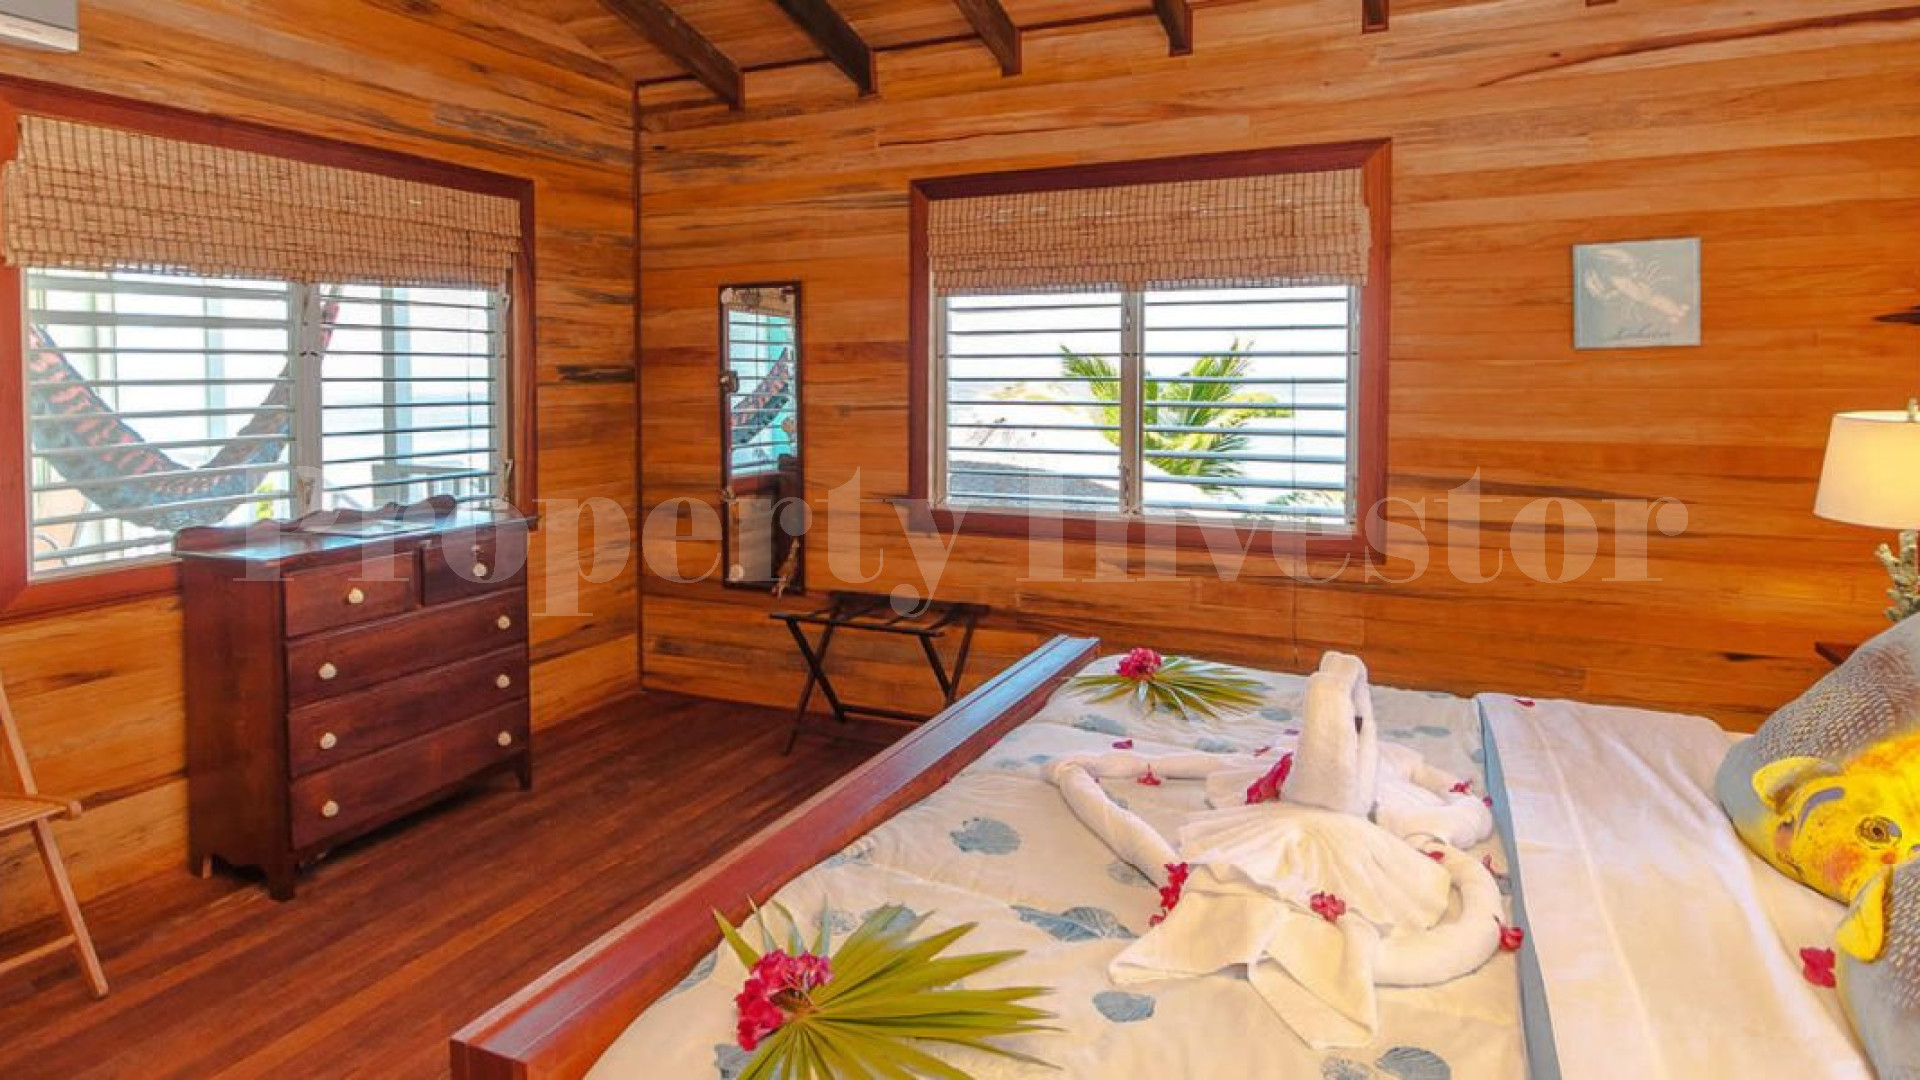 Private Boutique Island Resort for Sale in Belize